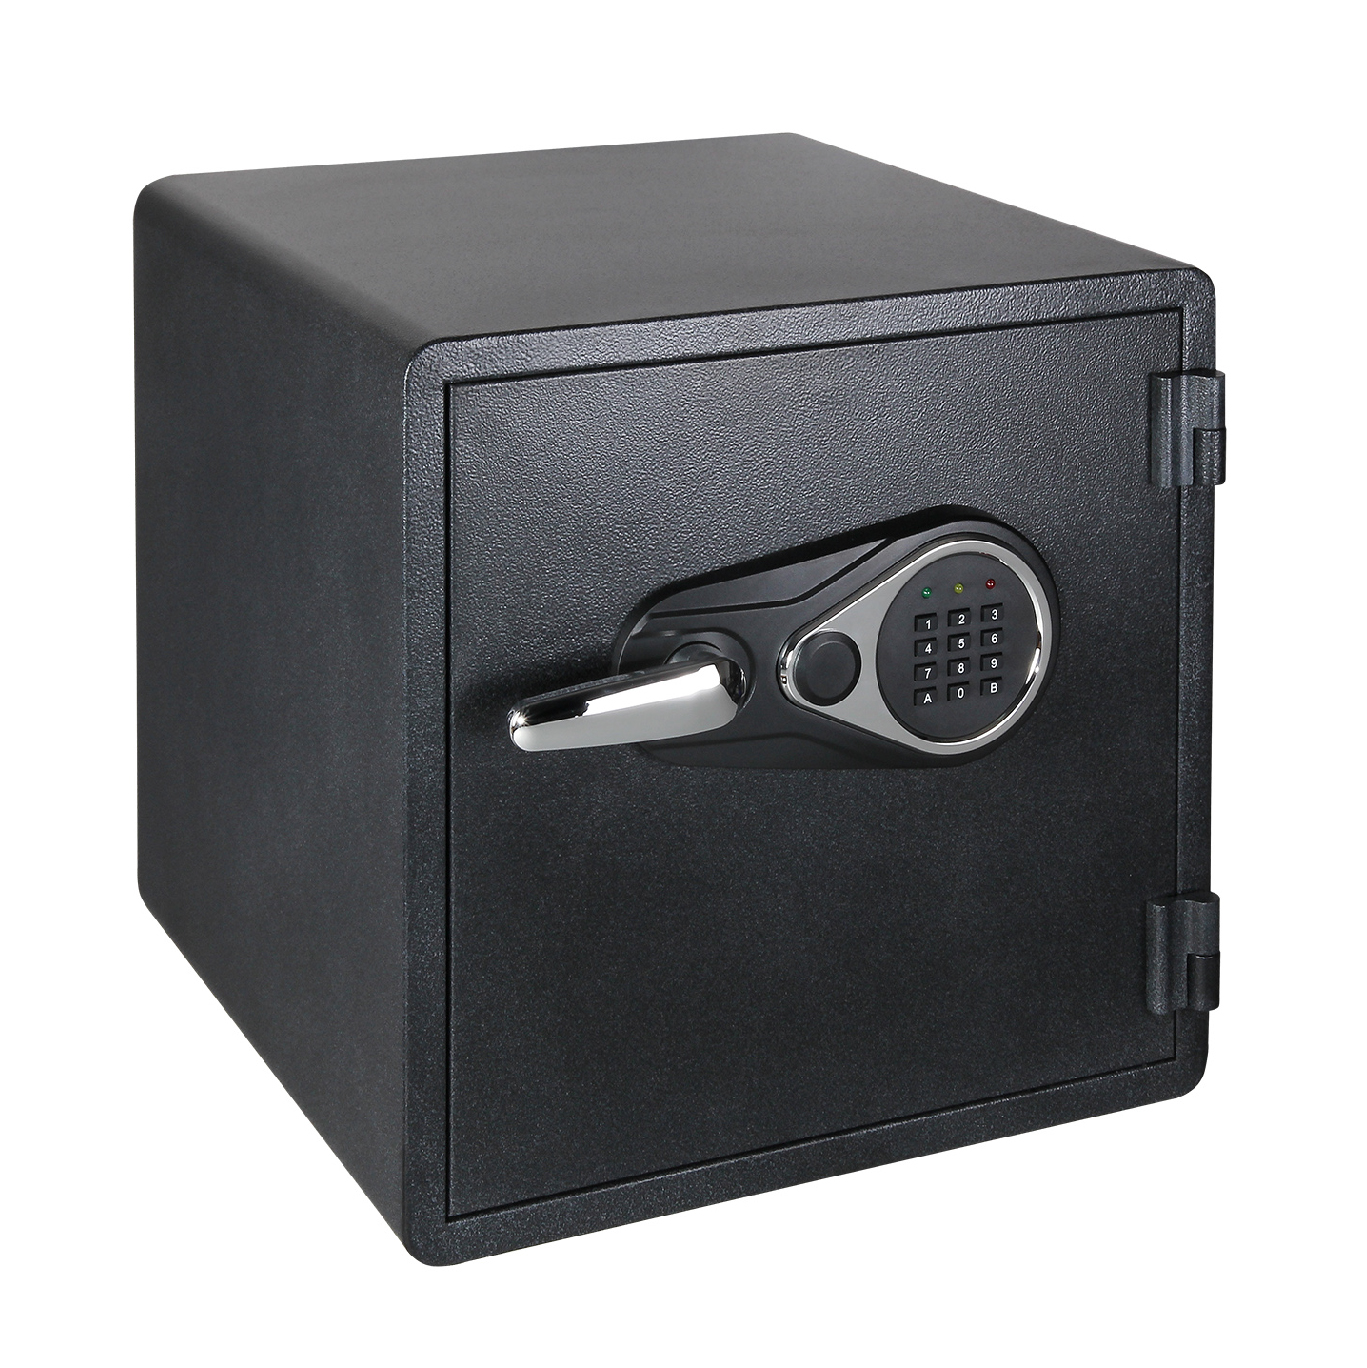 Lock Well Fire Safe, Digital Lock, 1 Removable Shelf, Black/Silver Color, SWF1818E